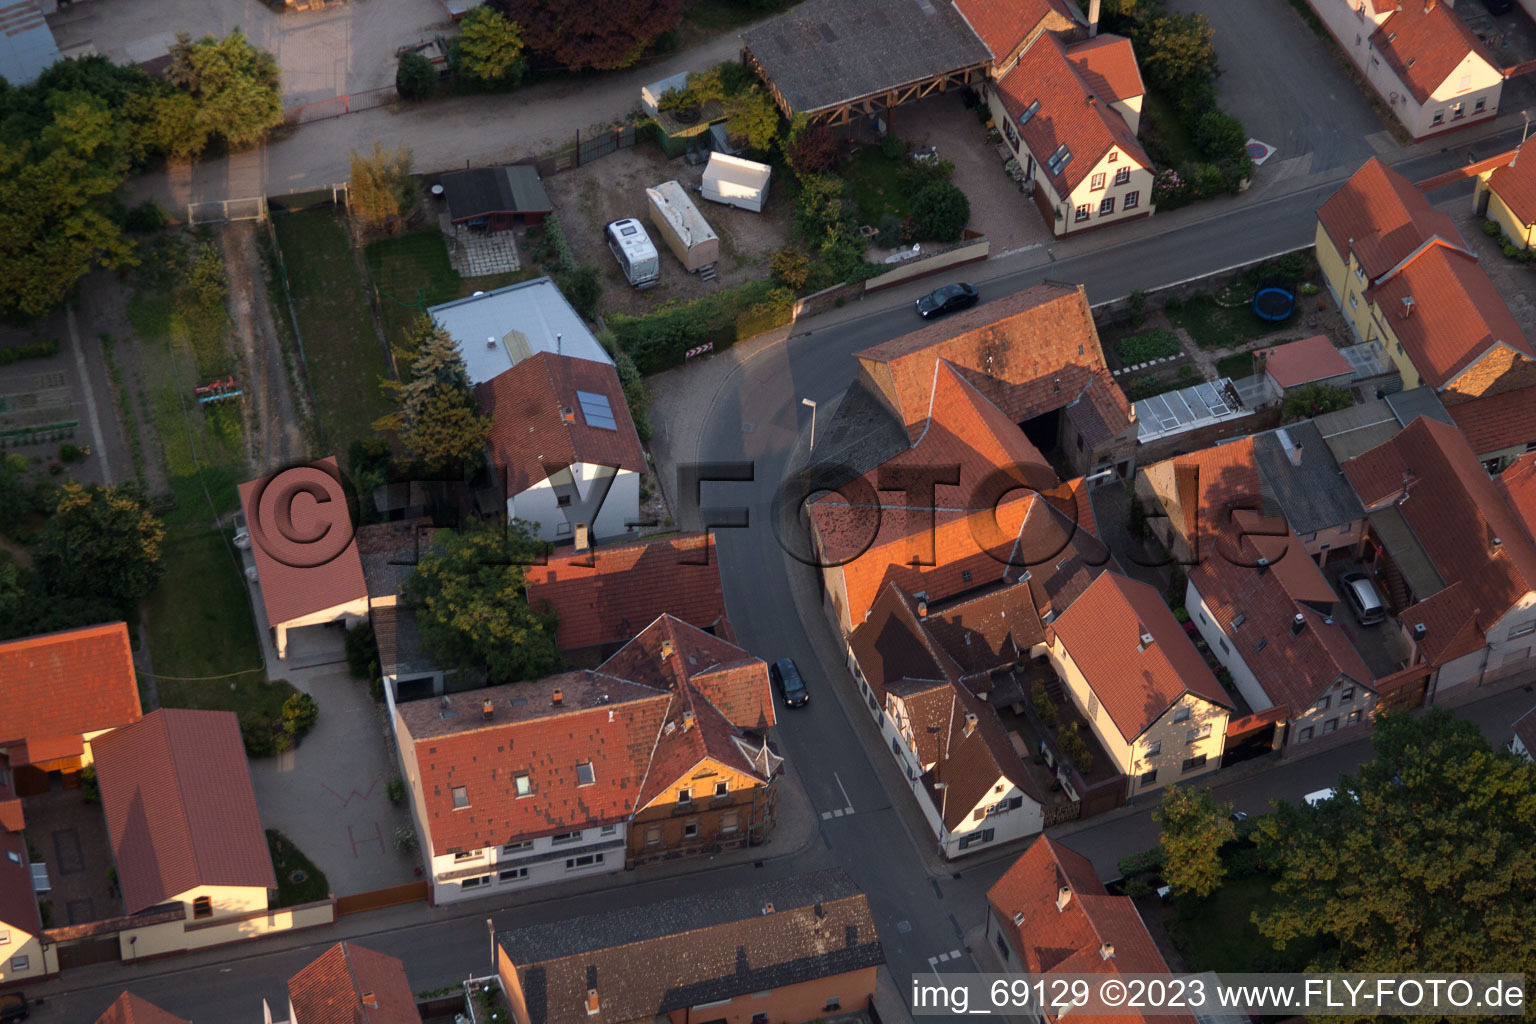 Quartier Bobenheim in Bobenheim-Roxheim dans le département Rhénanie-Palatinat, Allemagne vu d'un drone